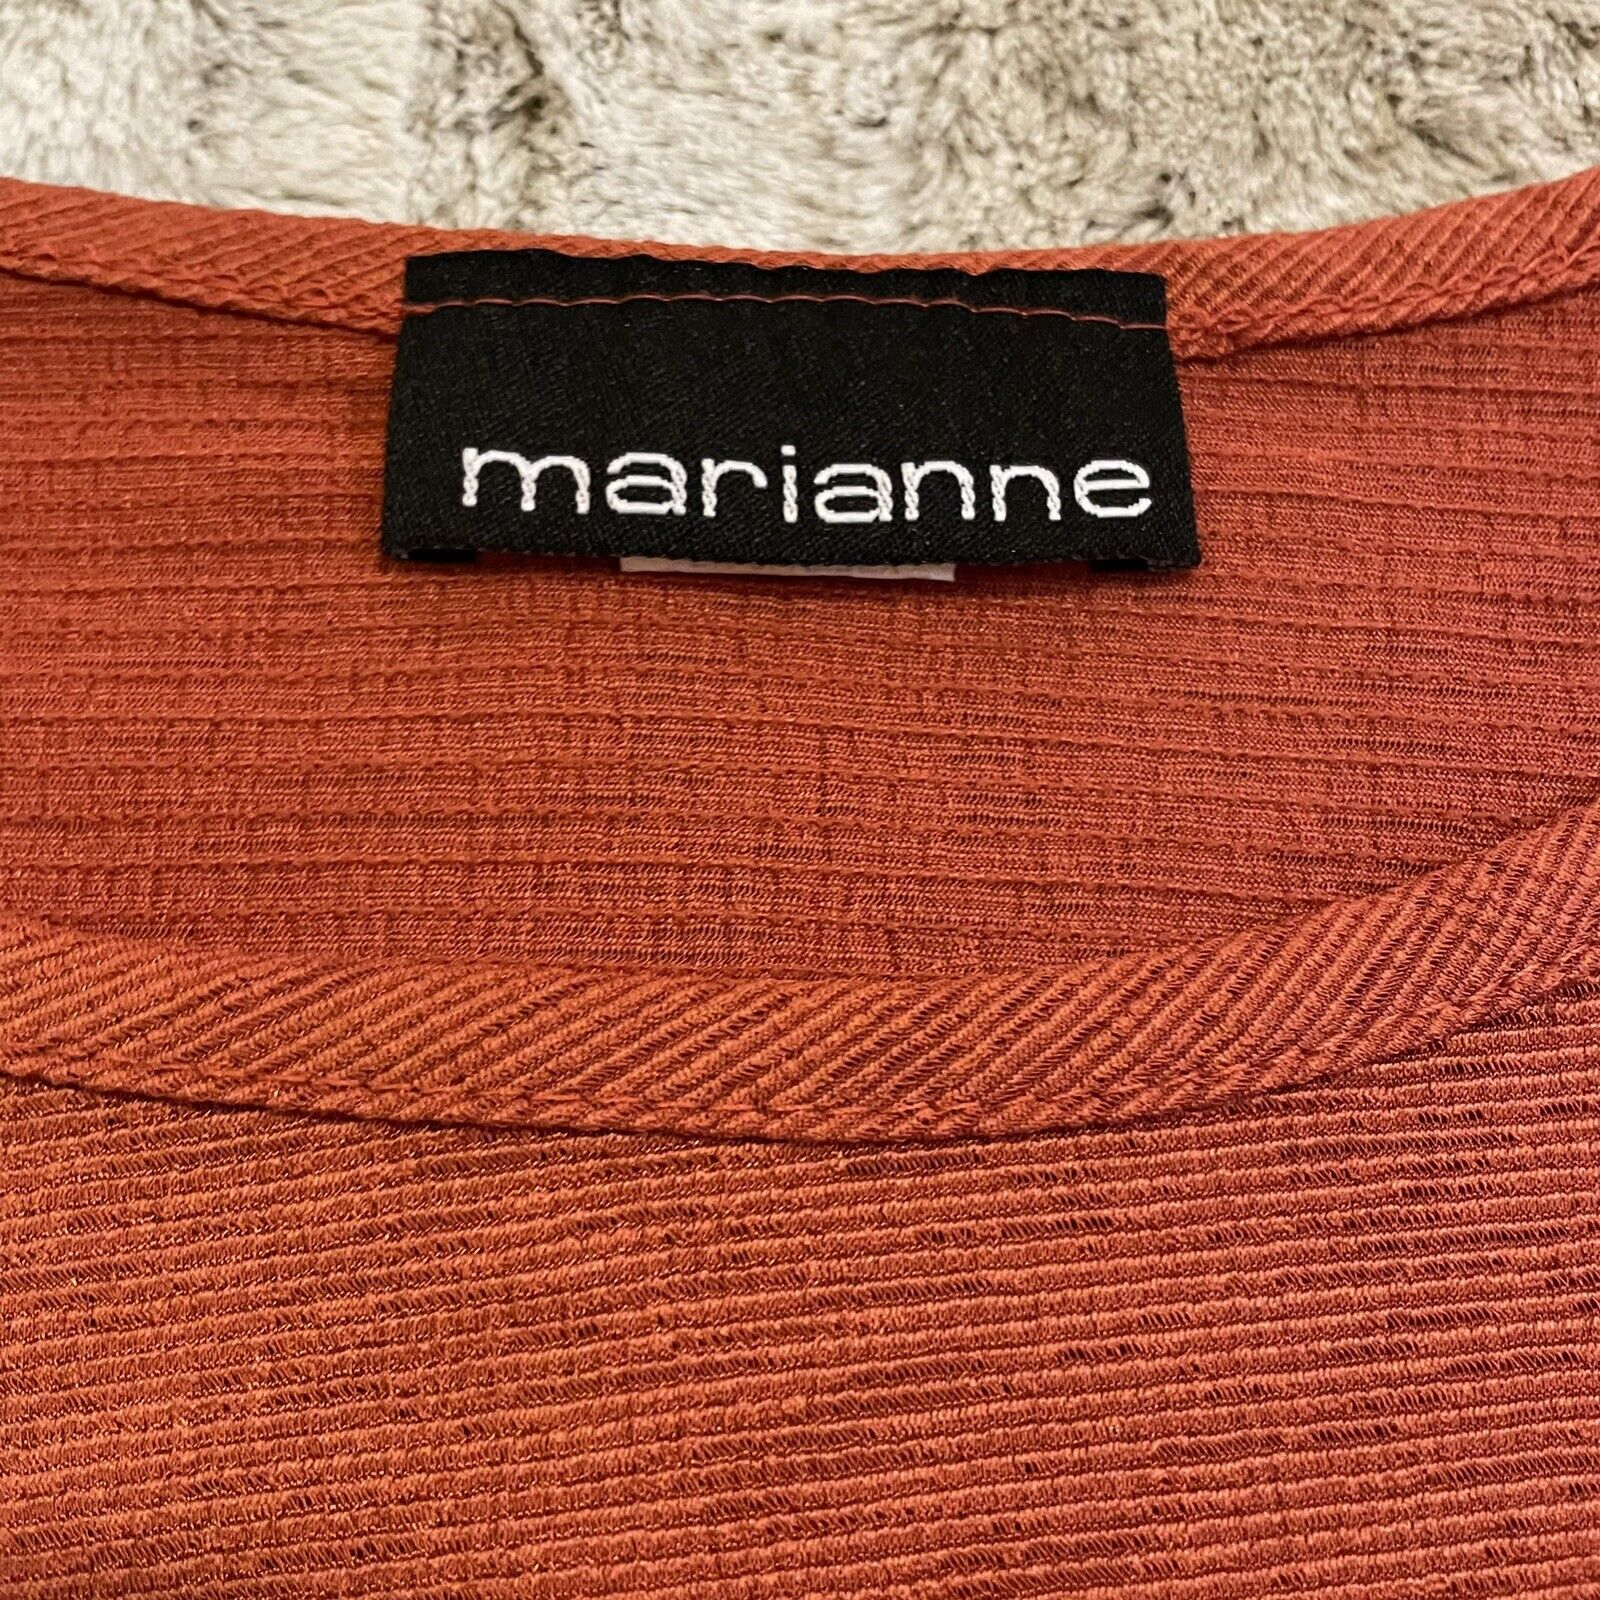 Marianne Shirt Size 1X - image 2